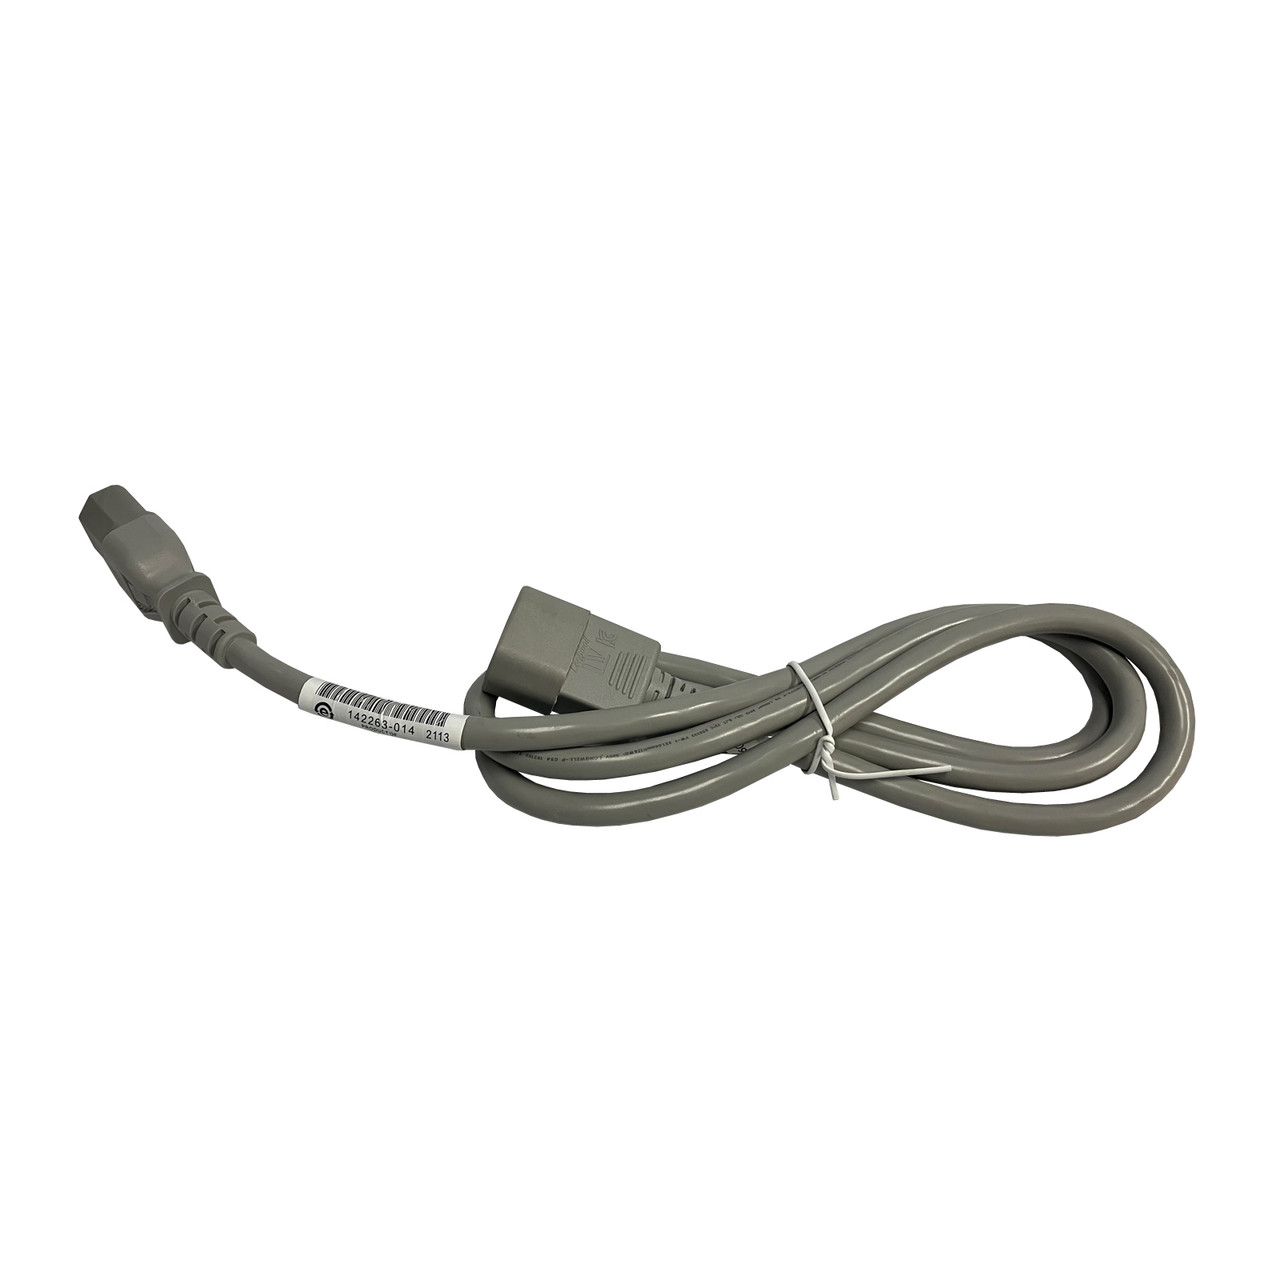 HP 142263-014  power cord  IEC to IEC grey A0K04A